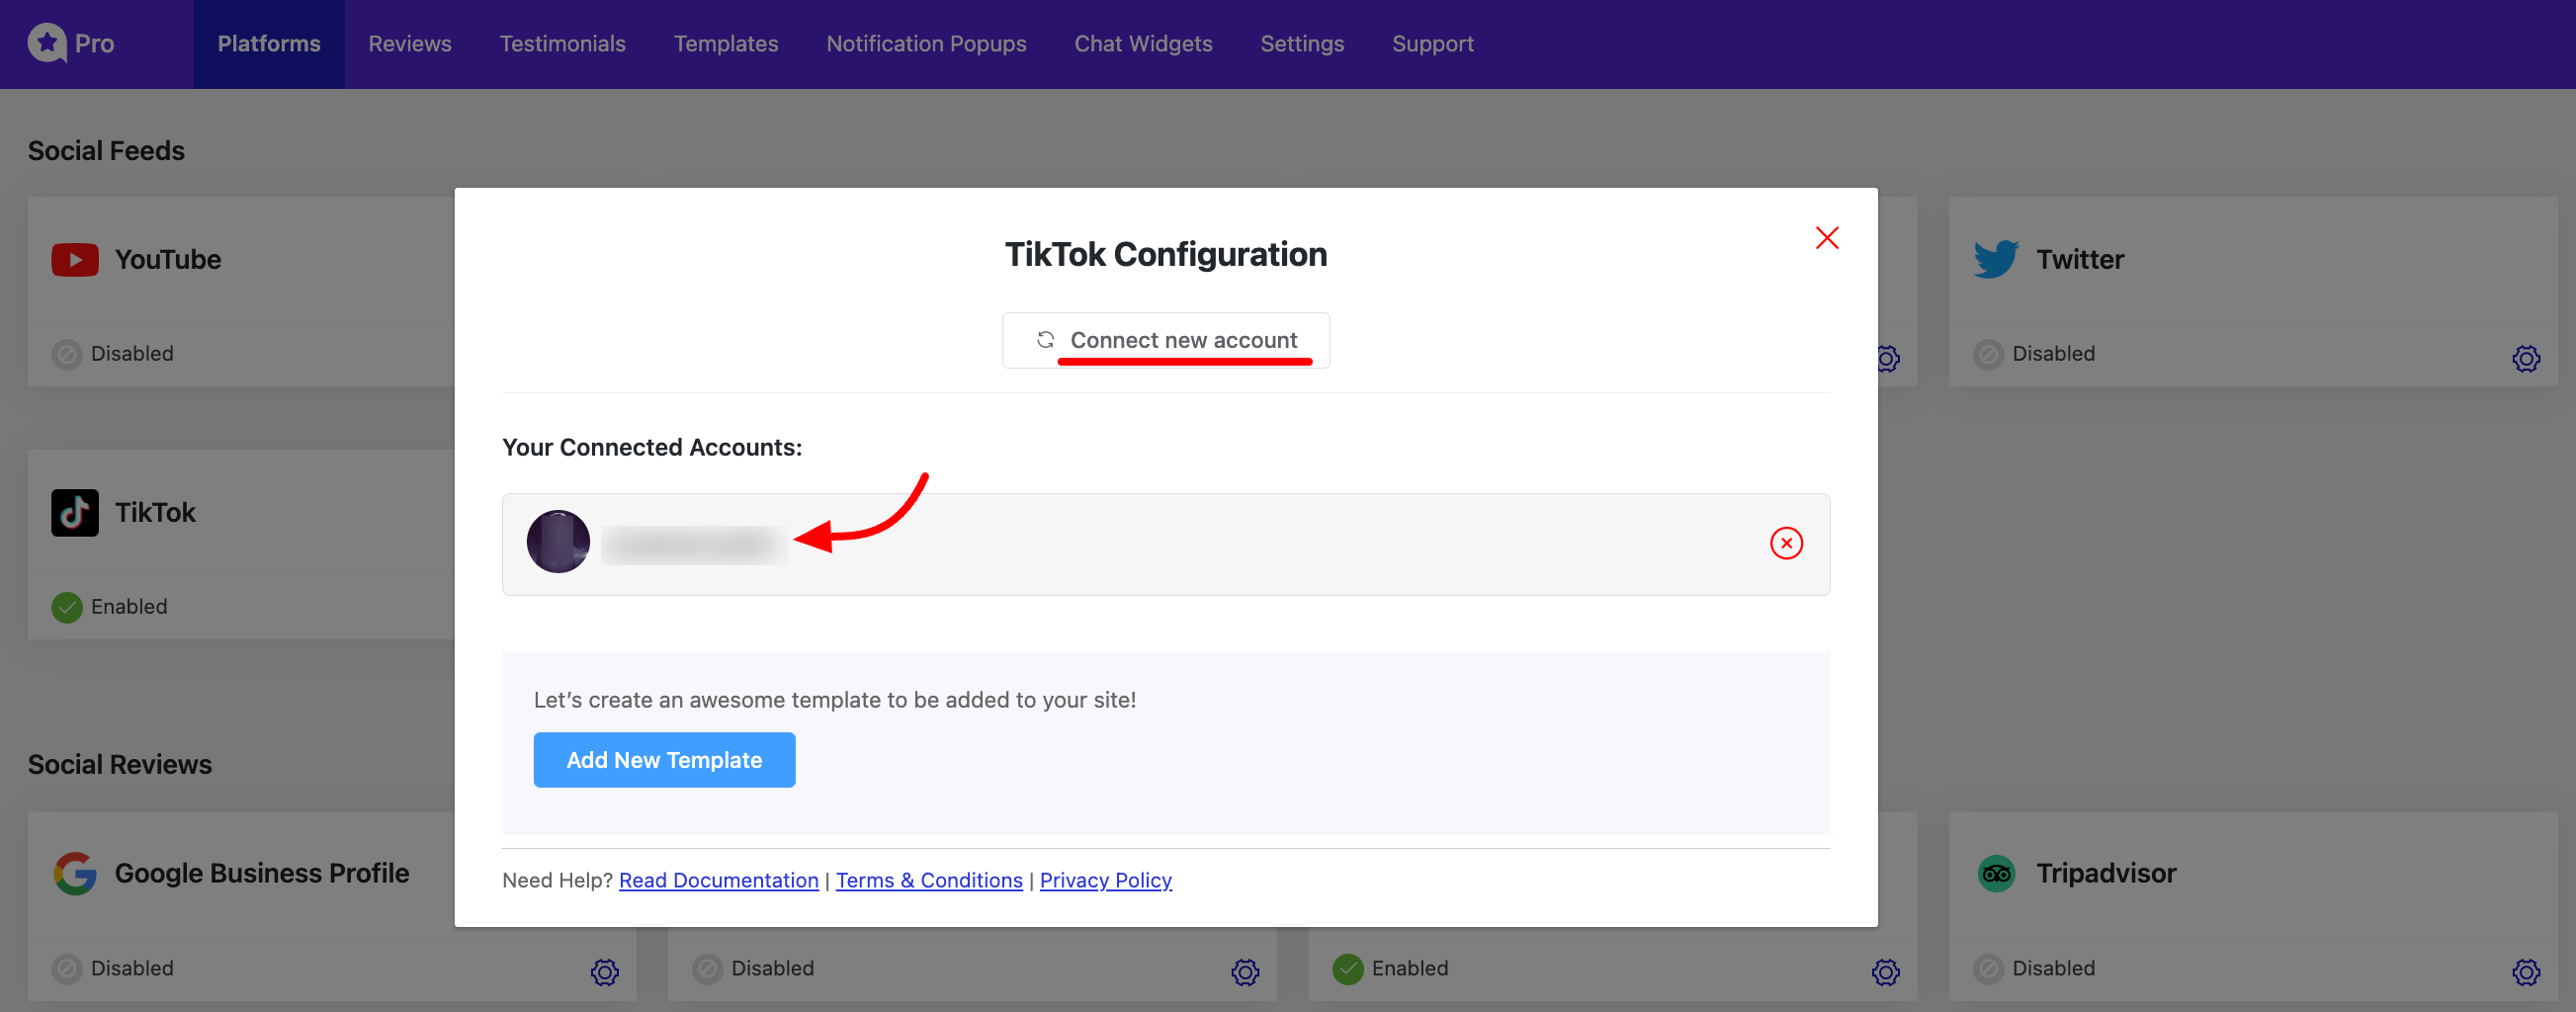 TikTok Connected Account 